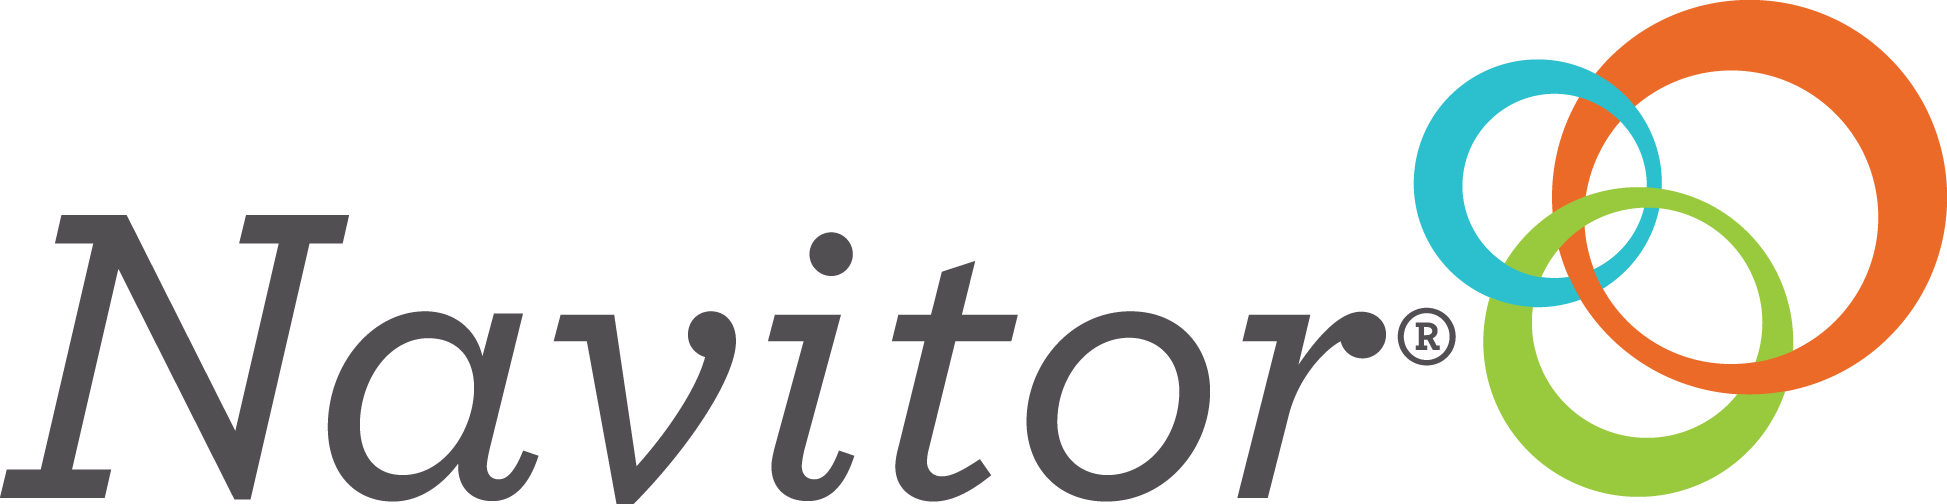 Navitor corporate logo